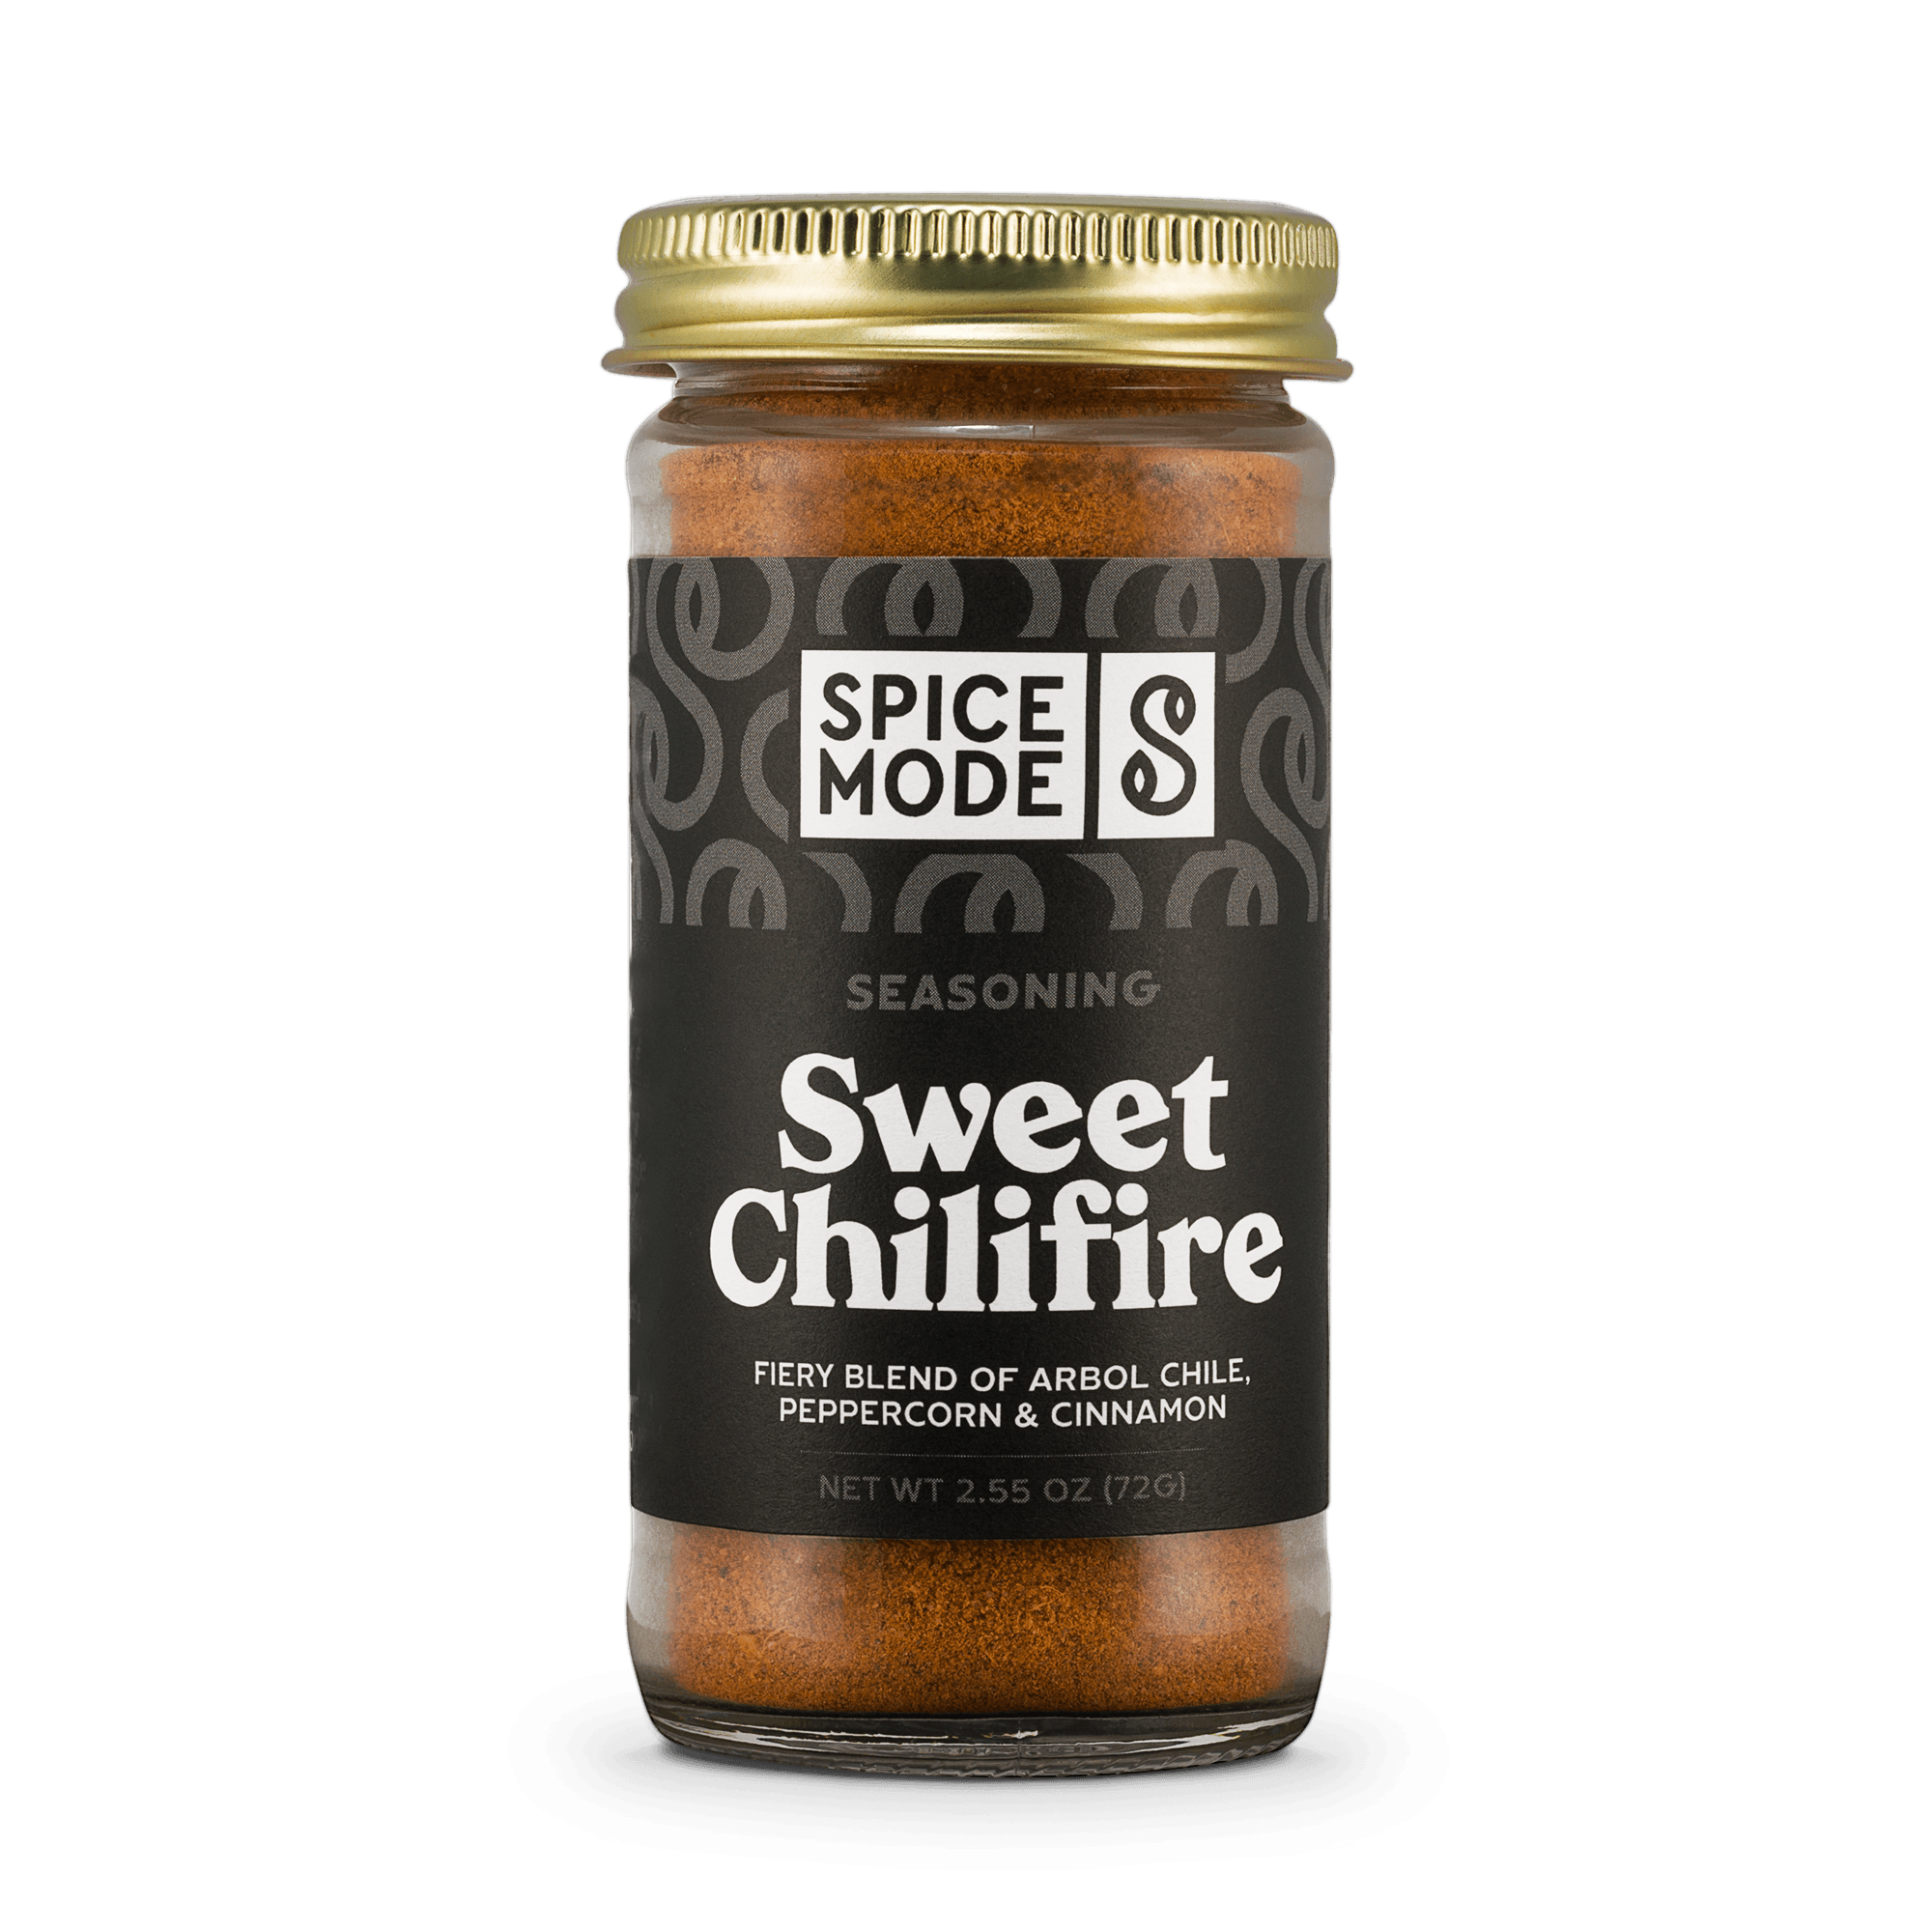 Sweet Chilifire